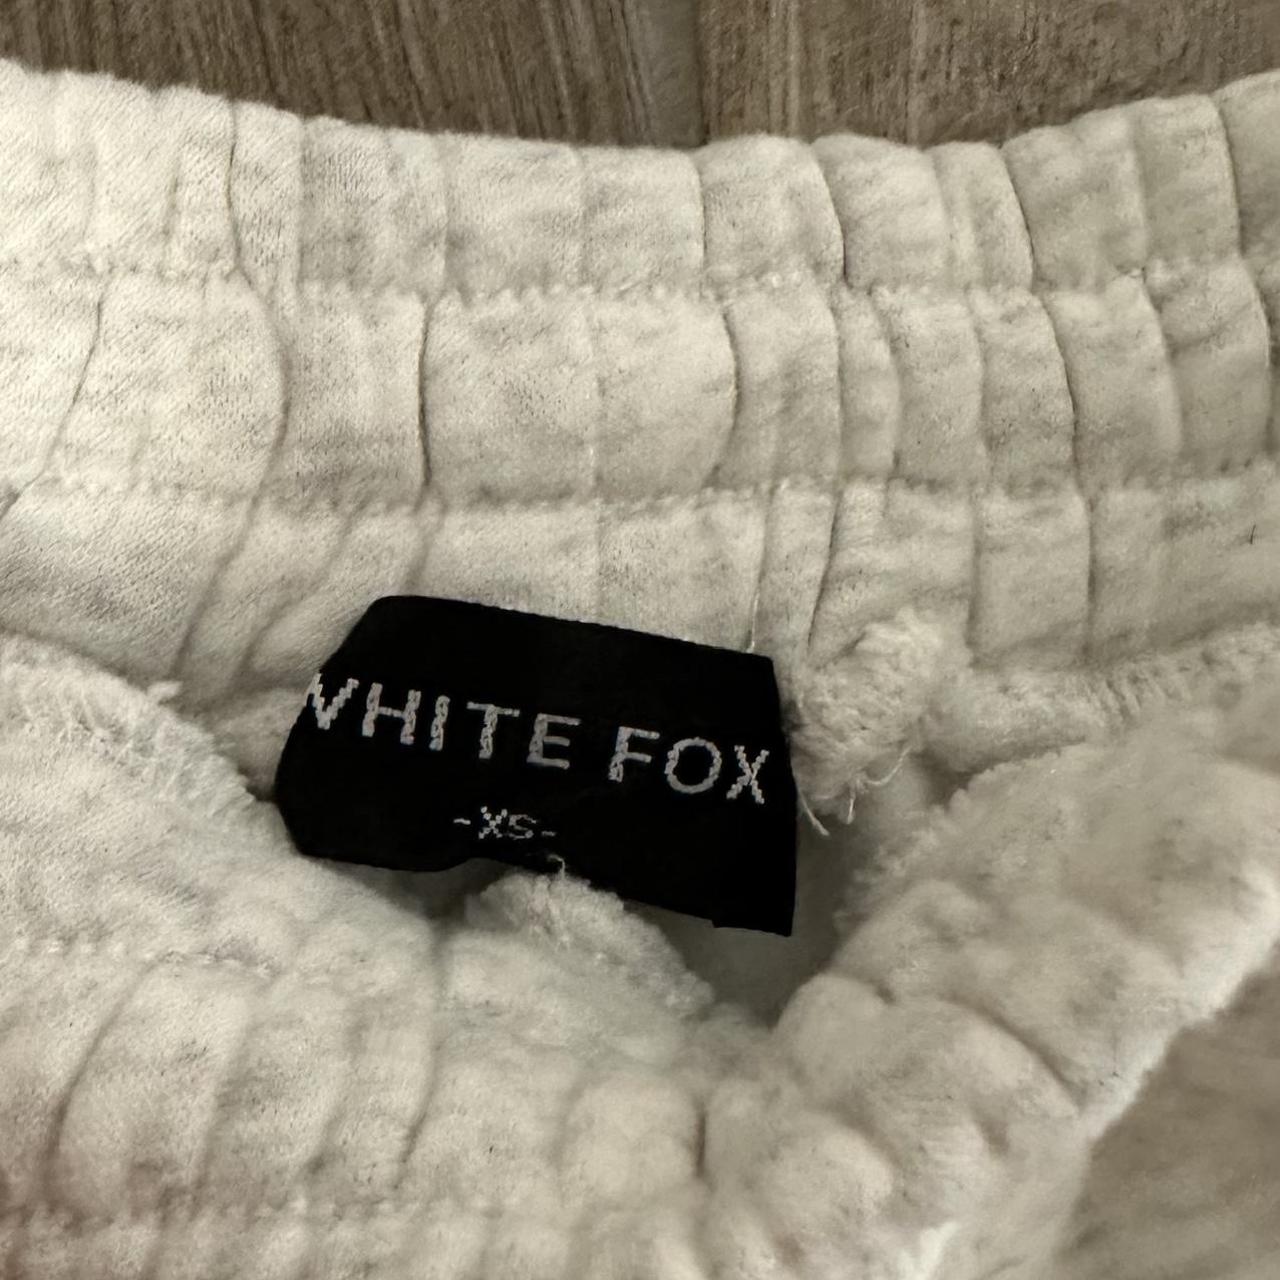 White fox shorts Fits 23-25 waist No flaws - Depop